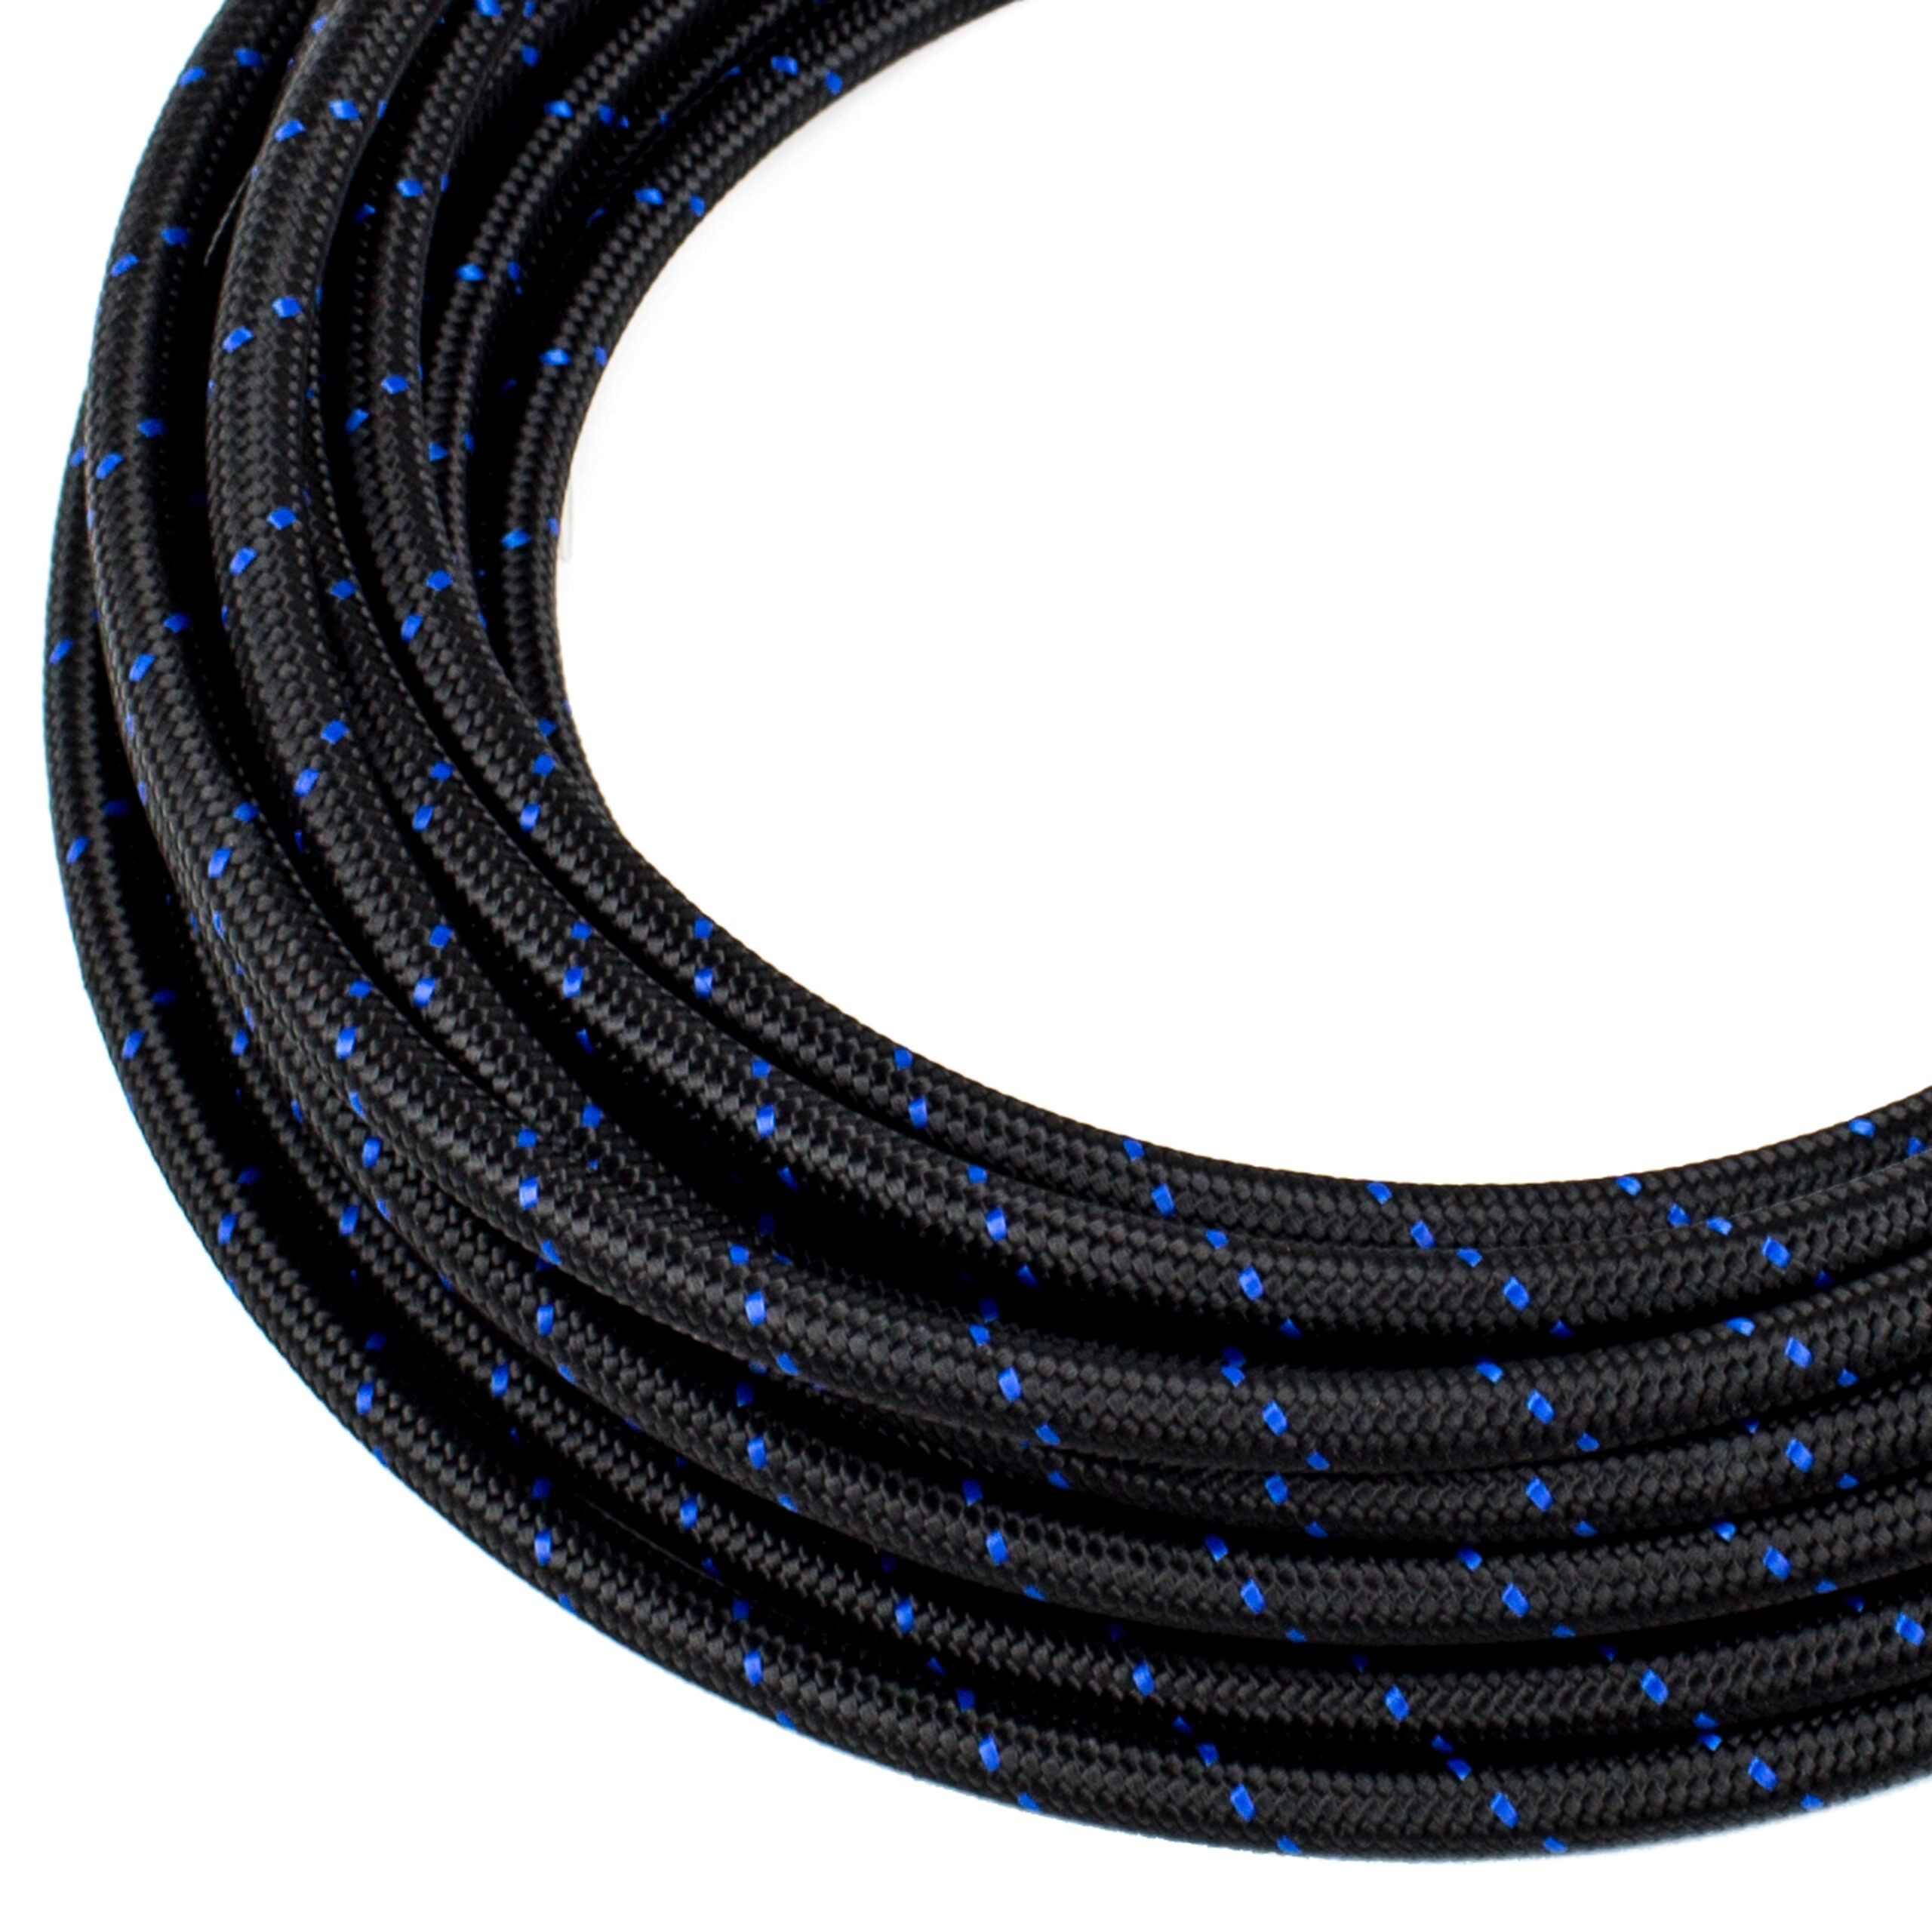 https://colorfittings.com/wp-content/uploads/2018/06/AN-Fitting-Nylon-Braided-Hose-Blue-Black-scaled.jpg